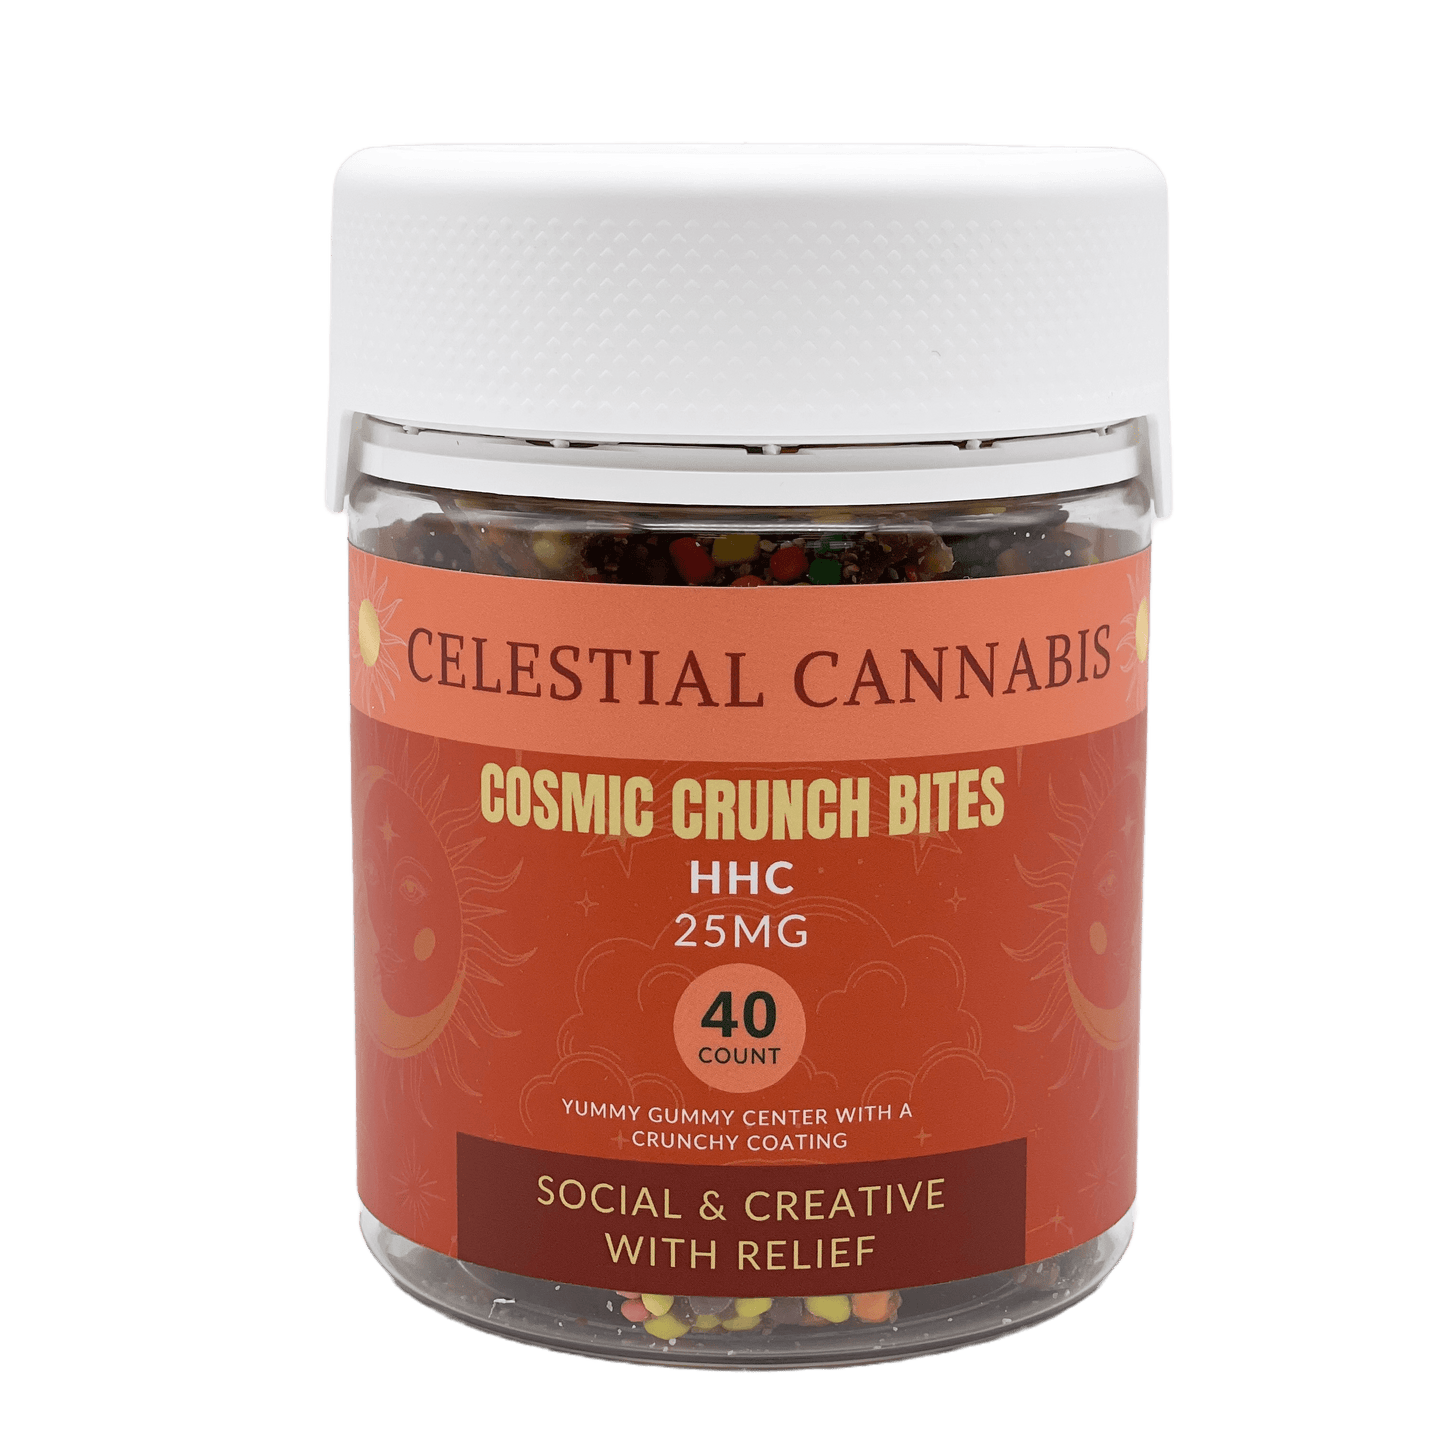 Celestial Cannabis HHC Cosmic Crunch Bites 40ct